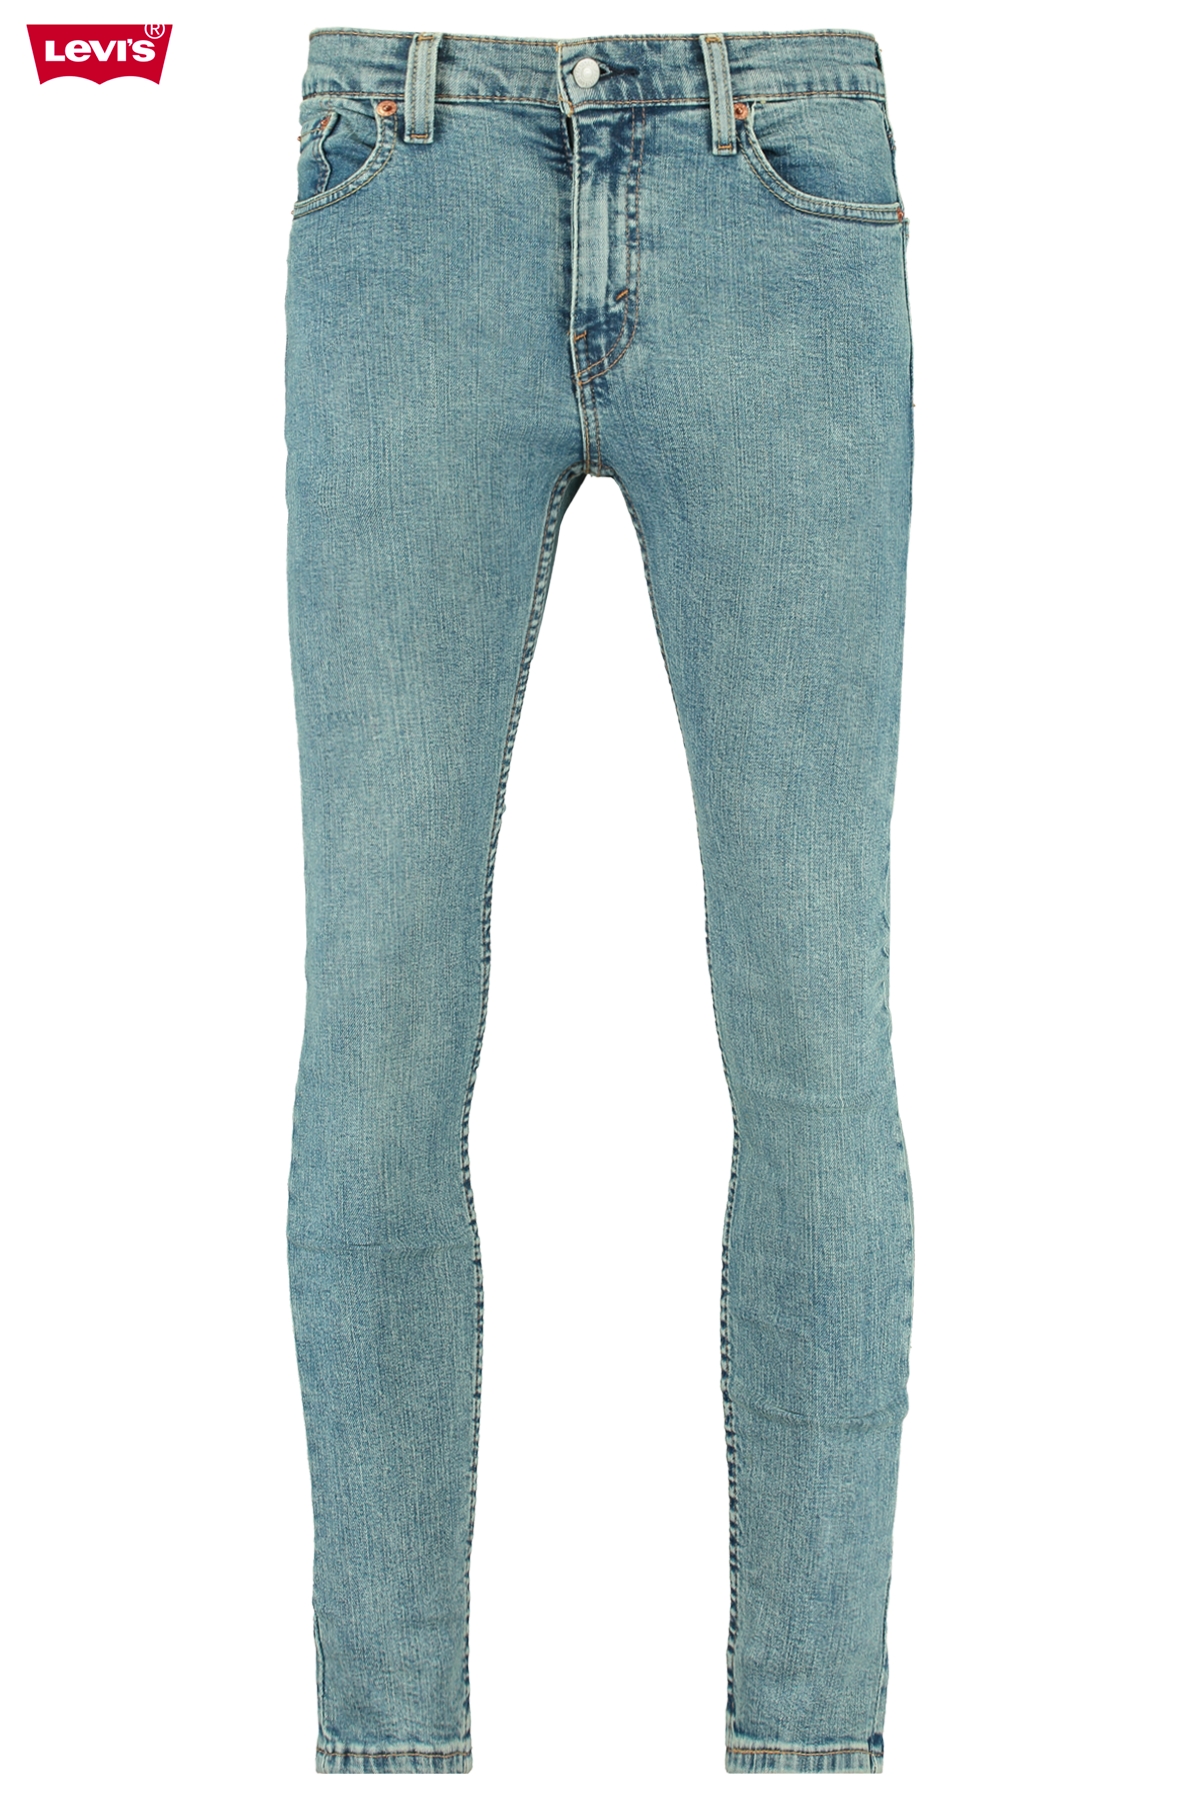 levis 519 black extreme skinny jeans, Off 79%, www.scrimaglio.com